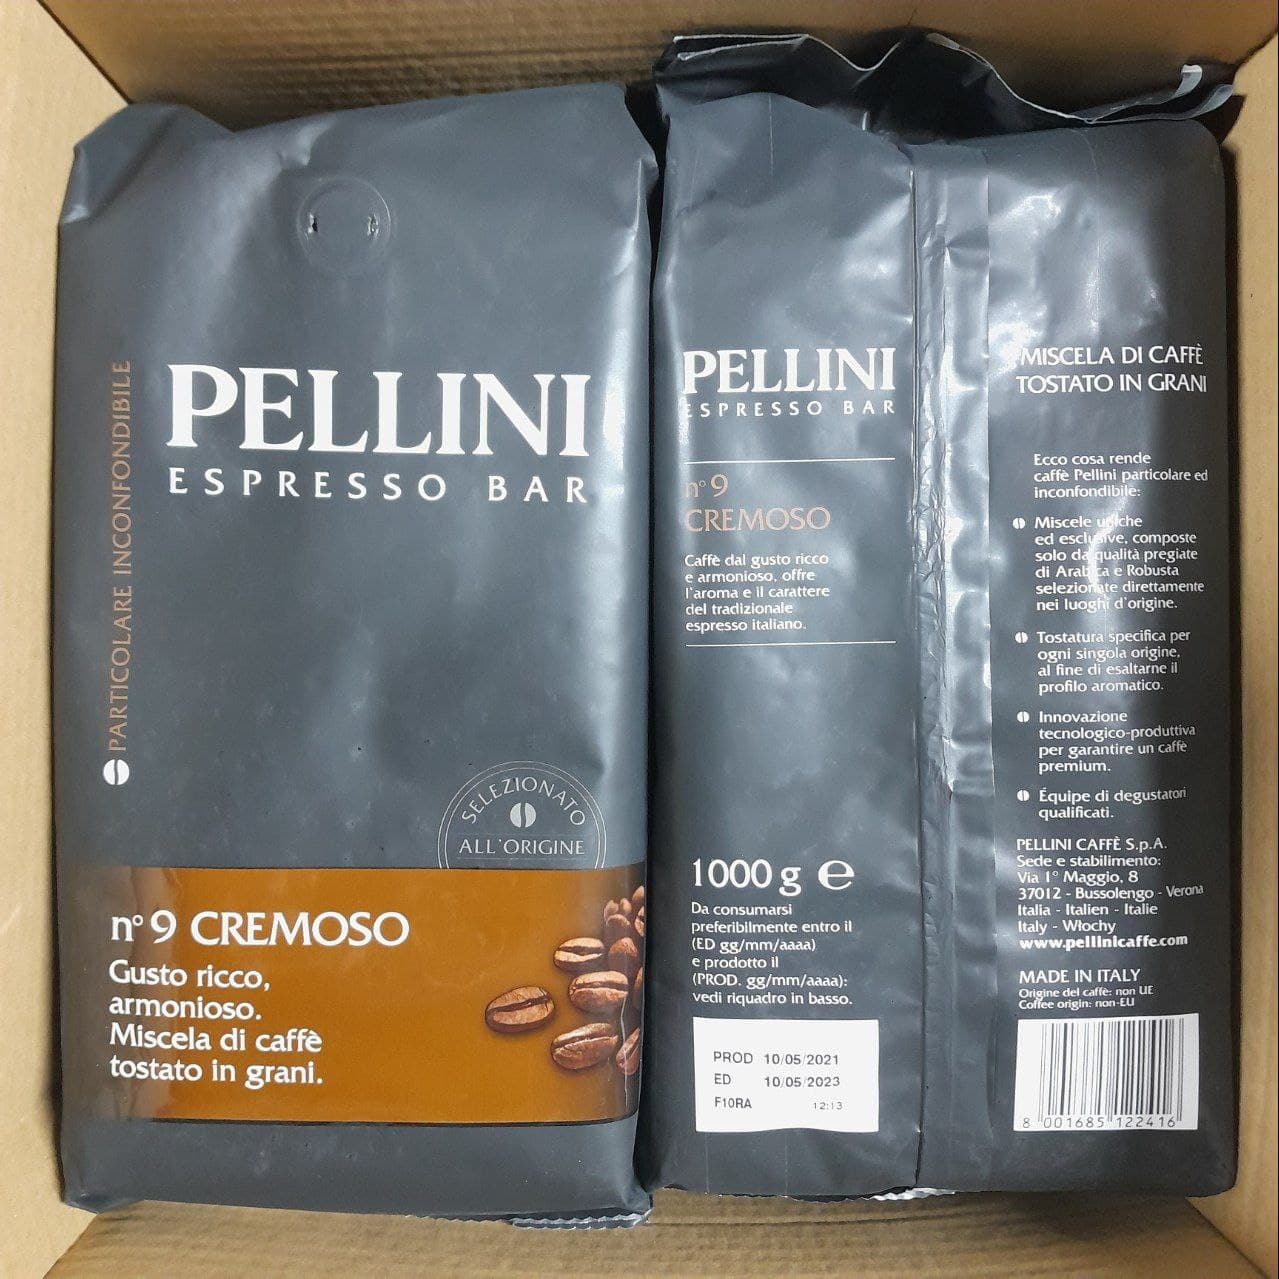 Kohvioad "PELLINI" Espresso Bar Cremoso